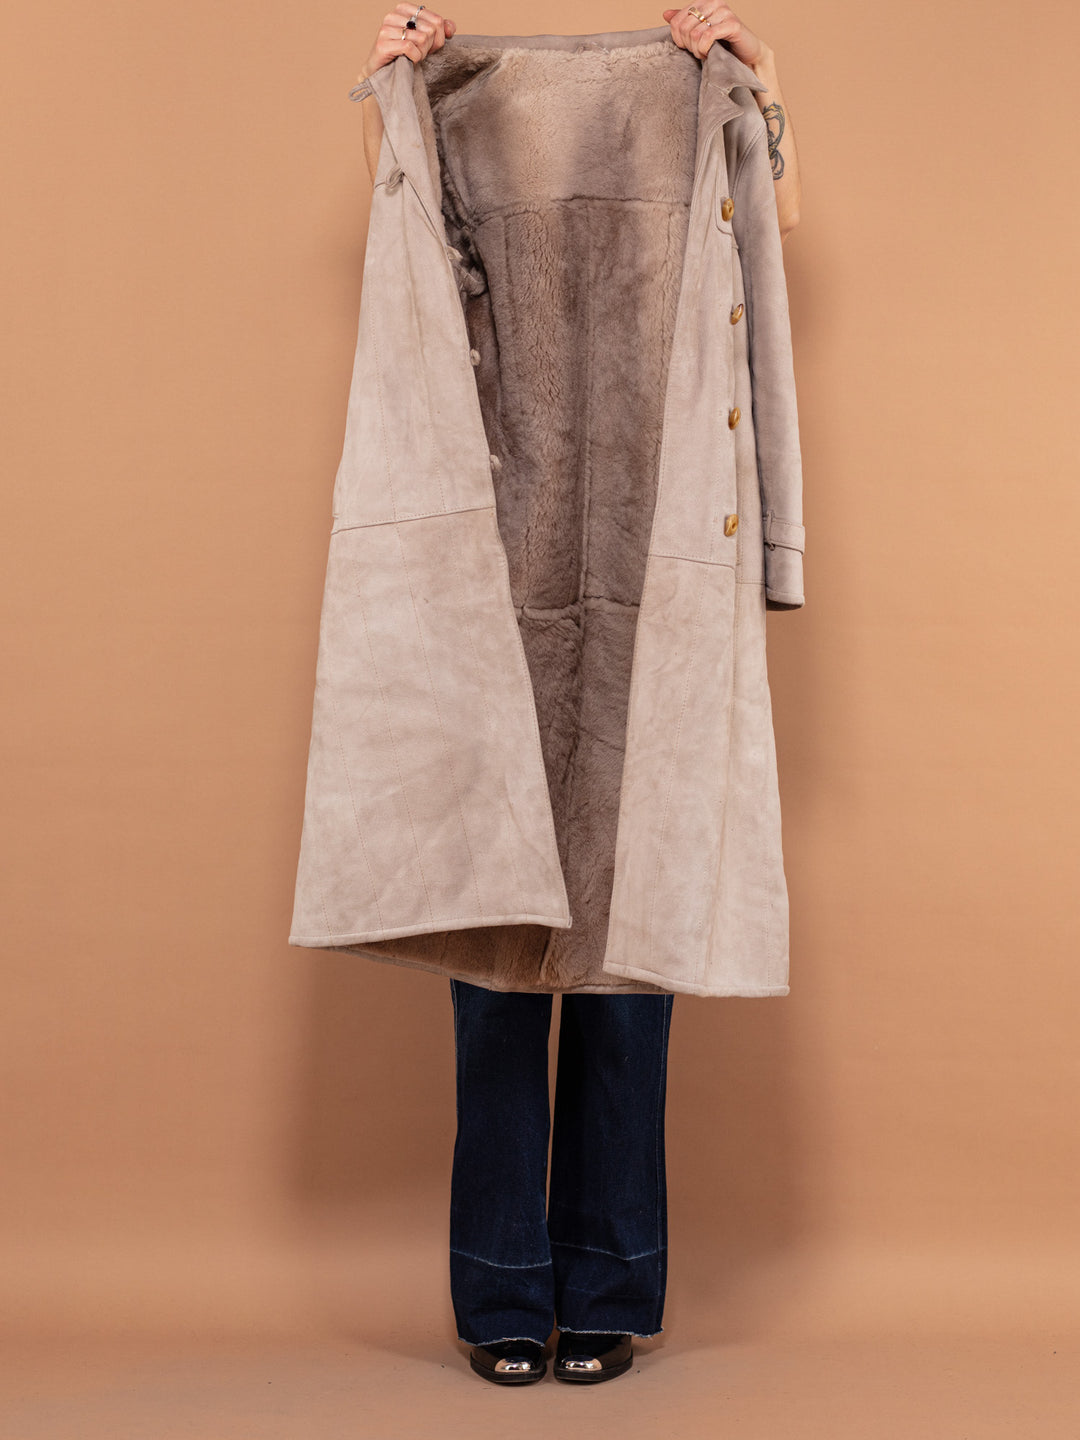 Gray Sheepskin Suede Coat 70's, Size L Large, Vintage Women Long Winter Coat, Retro Midi Length 80's Coat, Cozy Shearling Outerwear